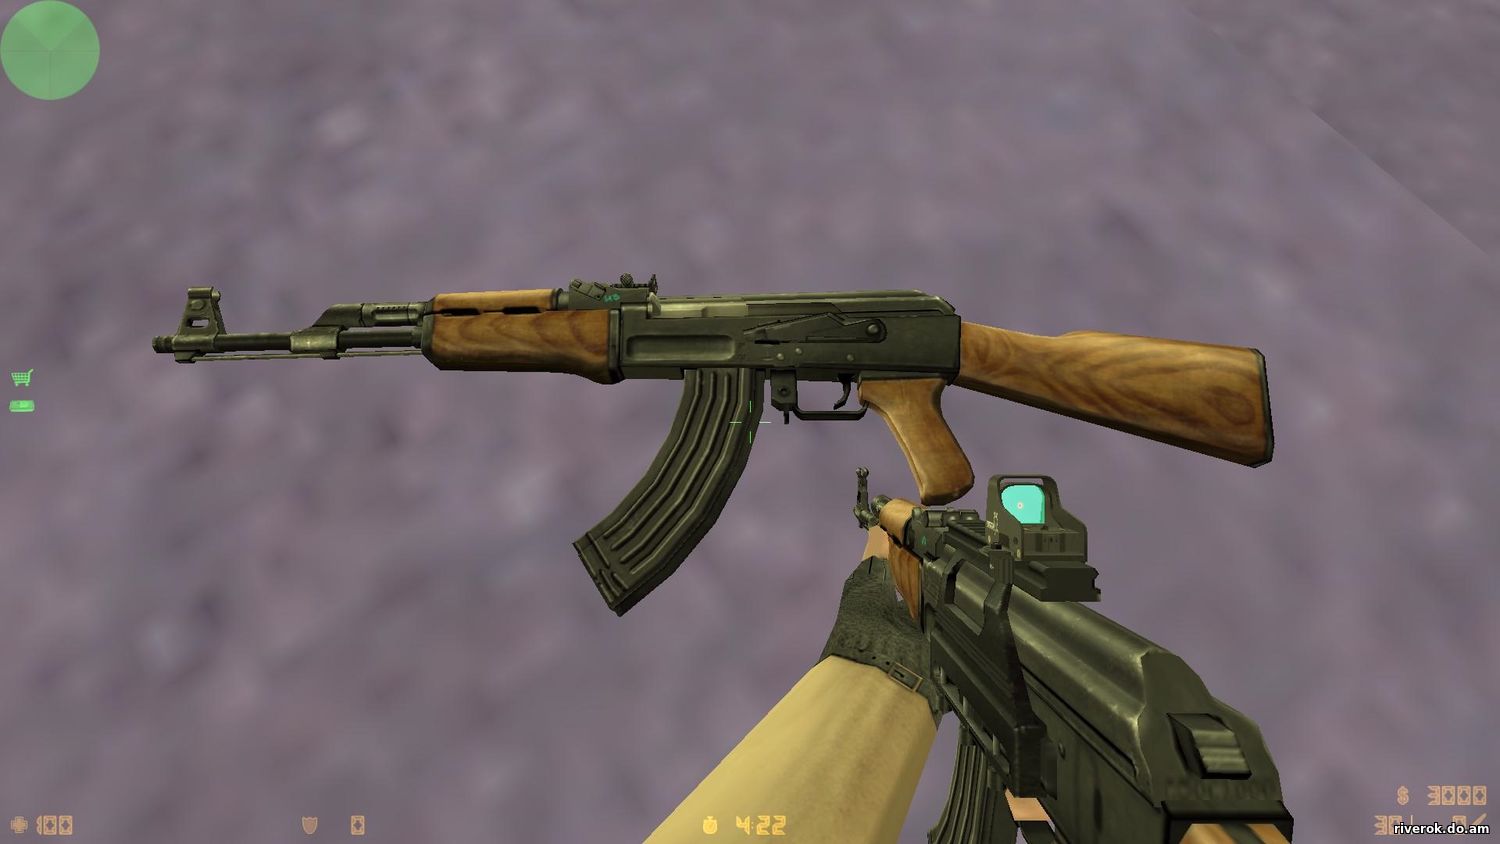 AK-47 Upgraded "...